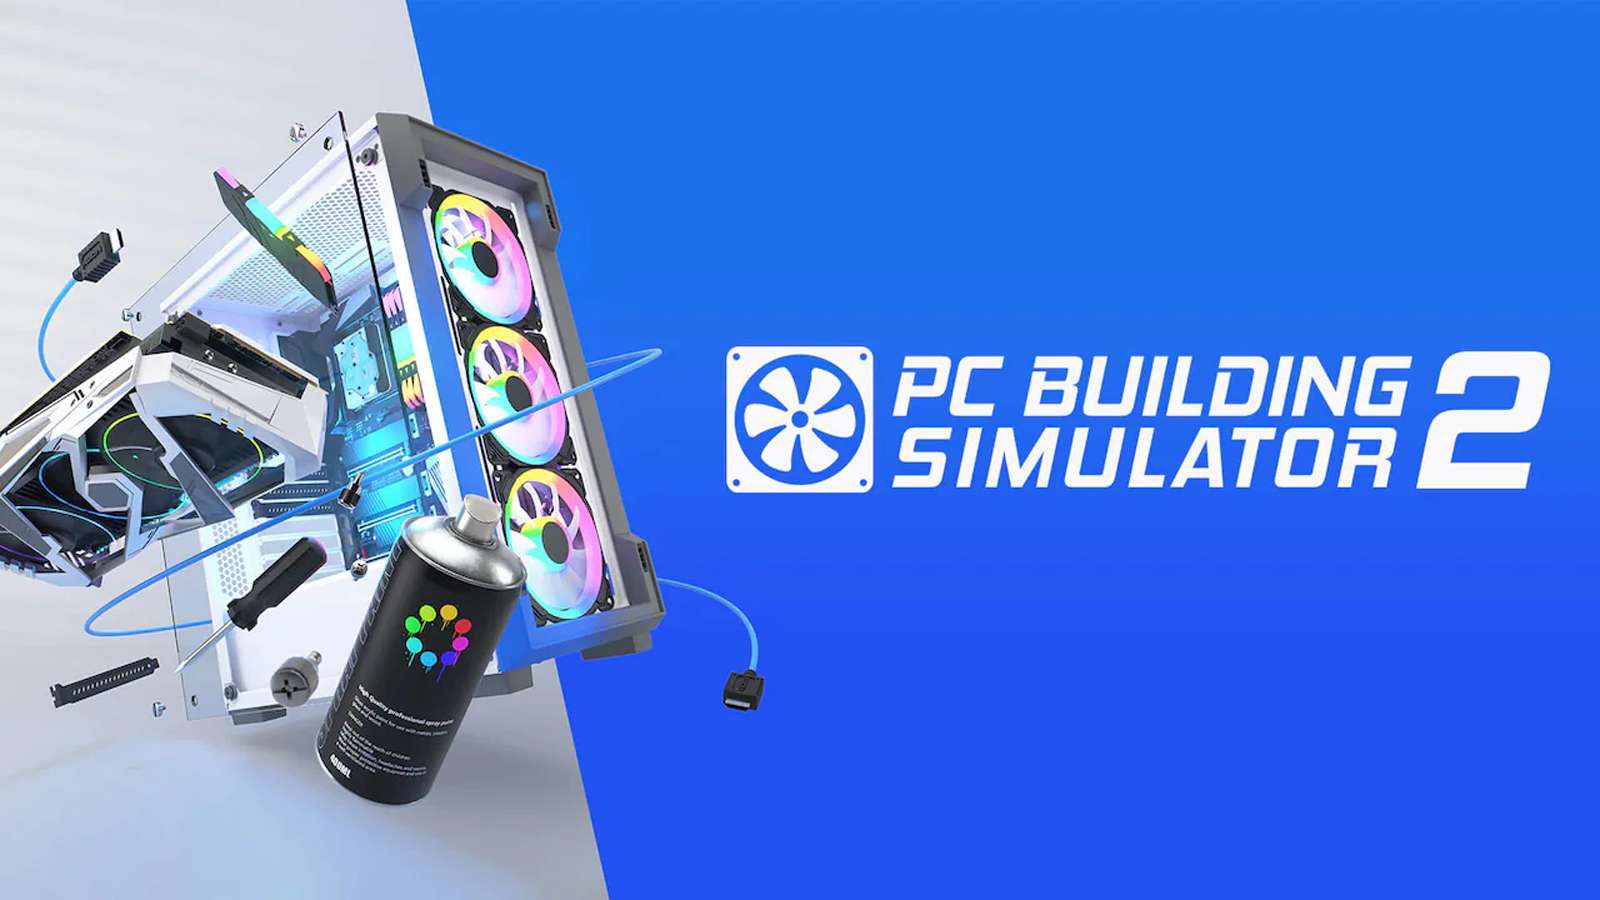 PC Building Simulator 2 official image